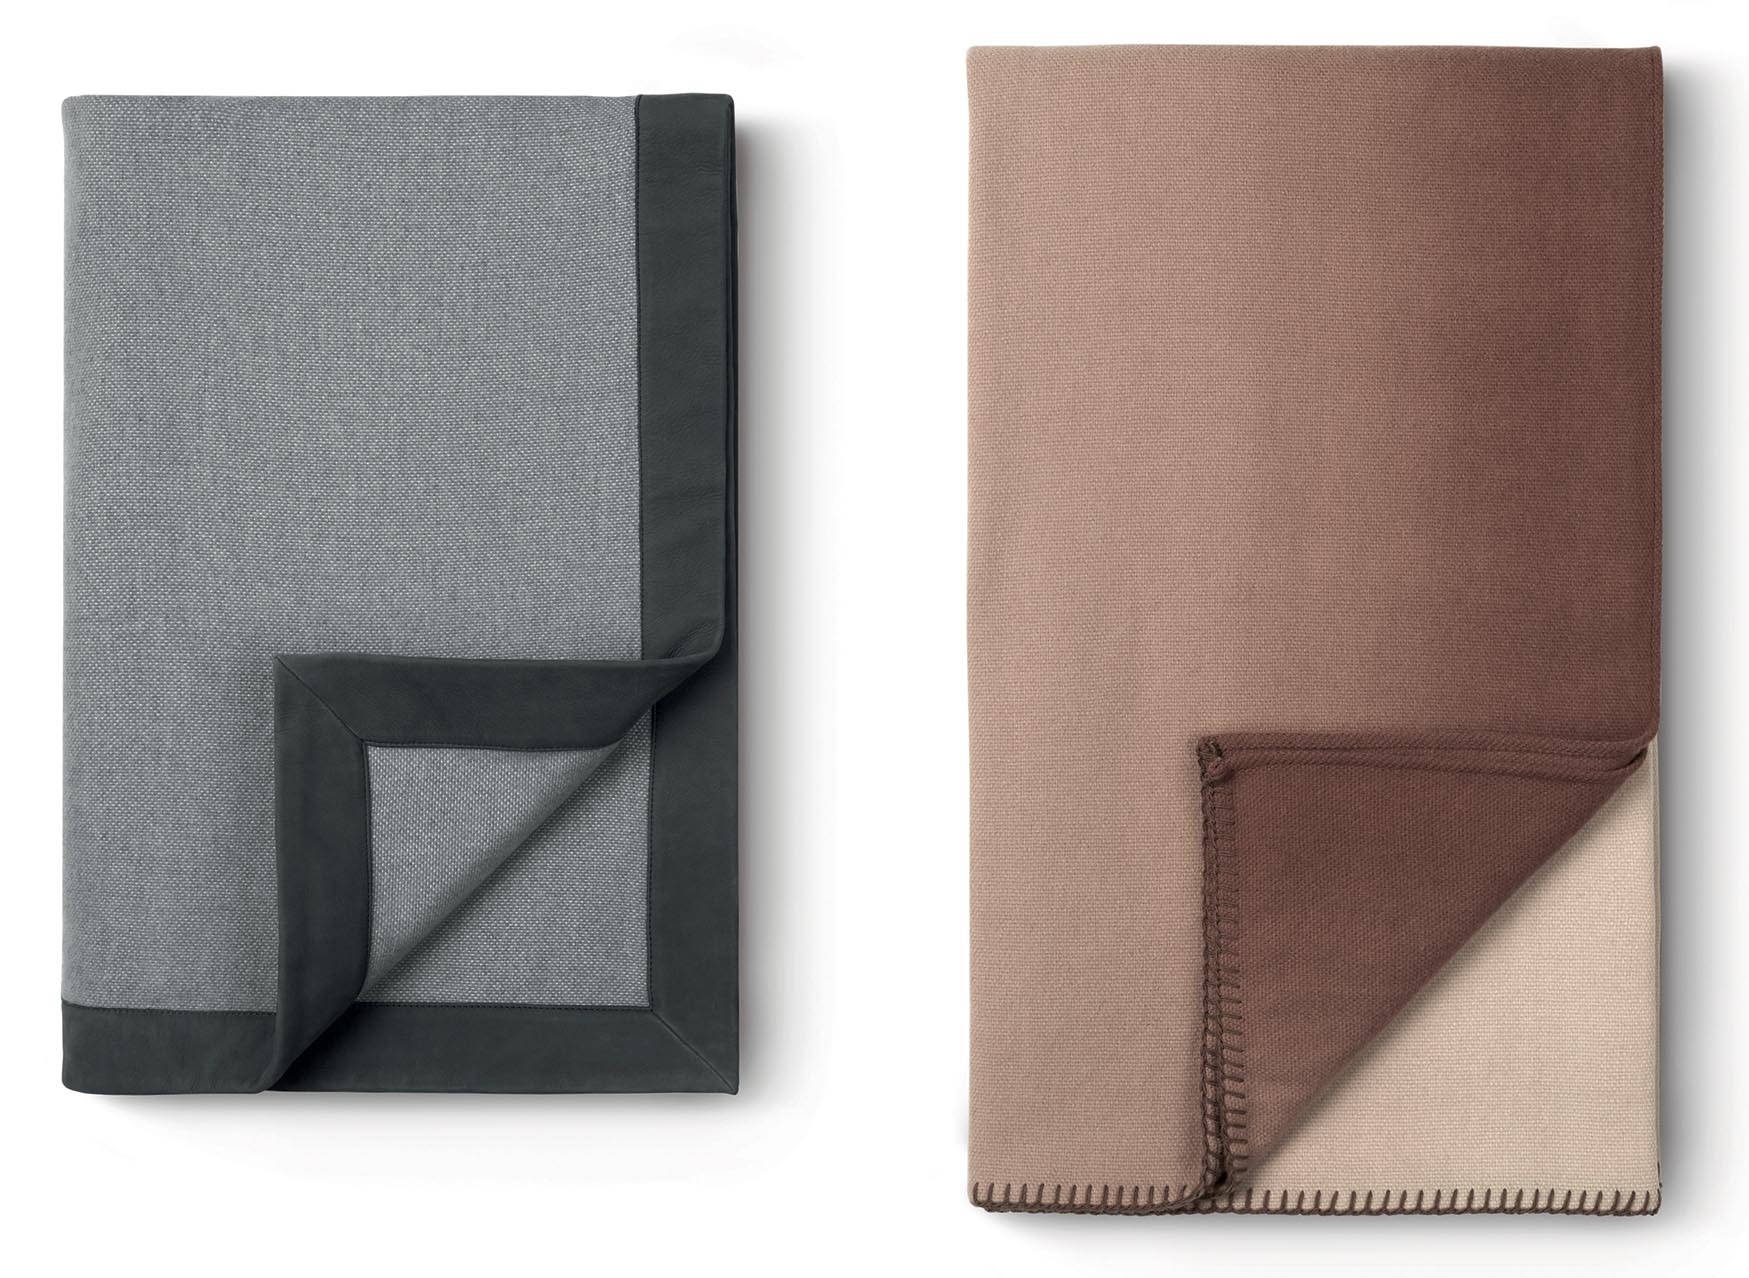 Modern blanket designs from Italian company Molteni&C.